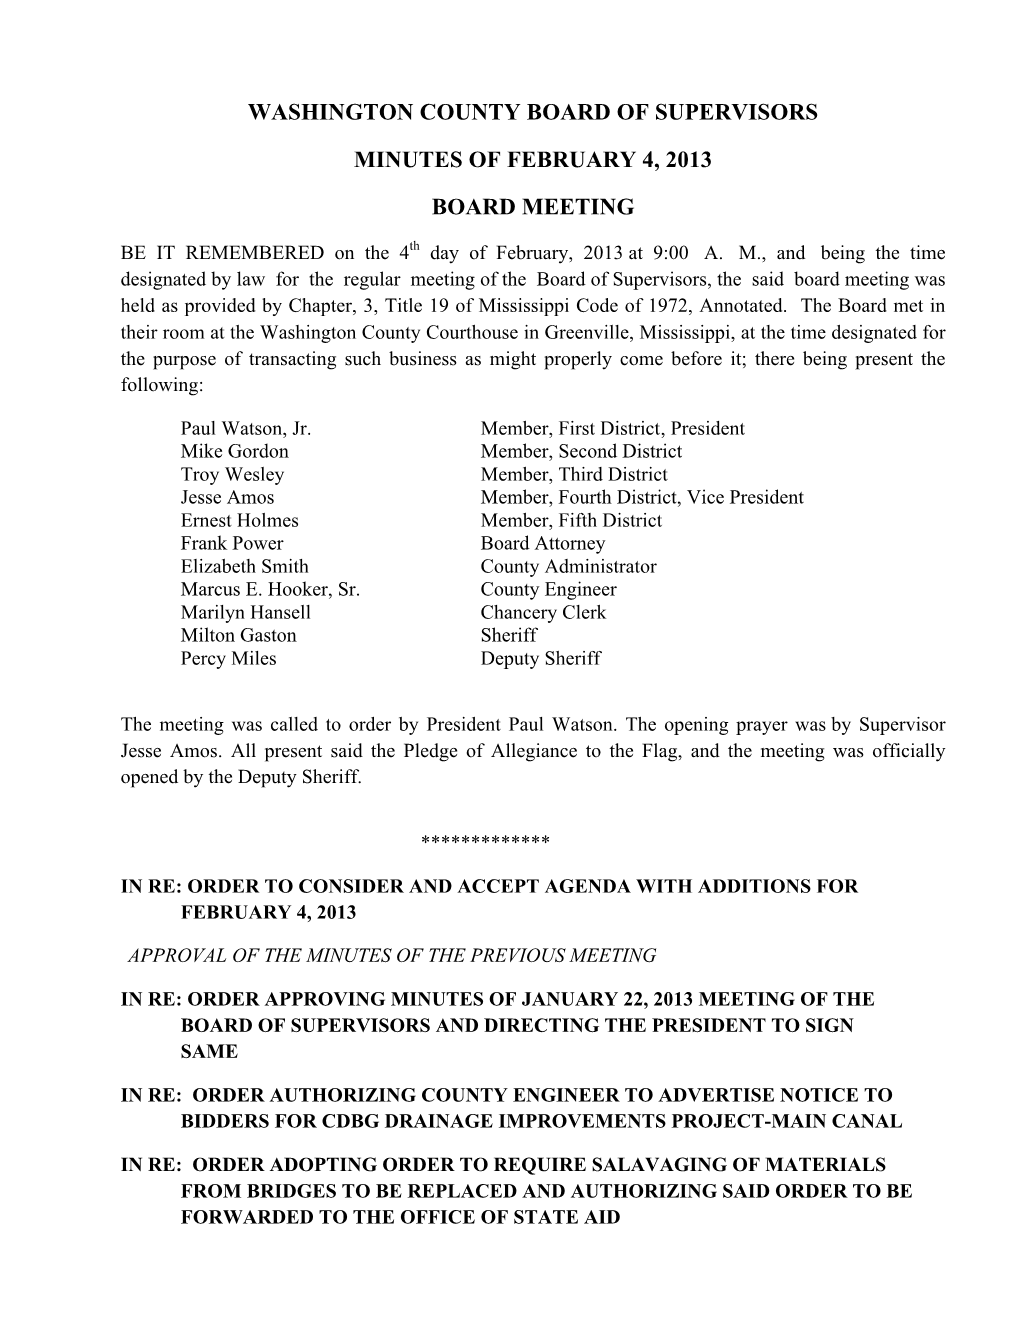 Washington County Board of Supervisors Minutes of February 4, 2013 Board Meeting